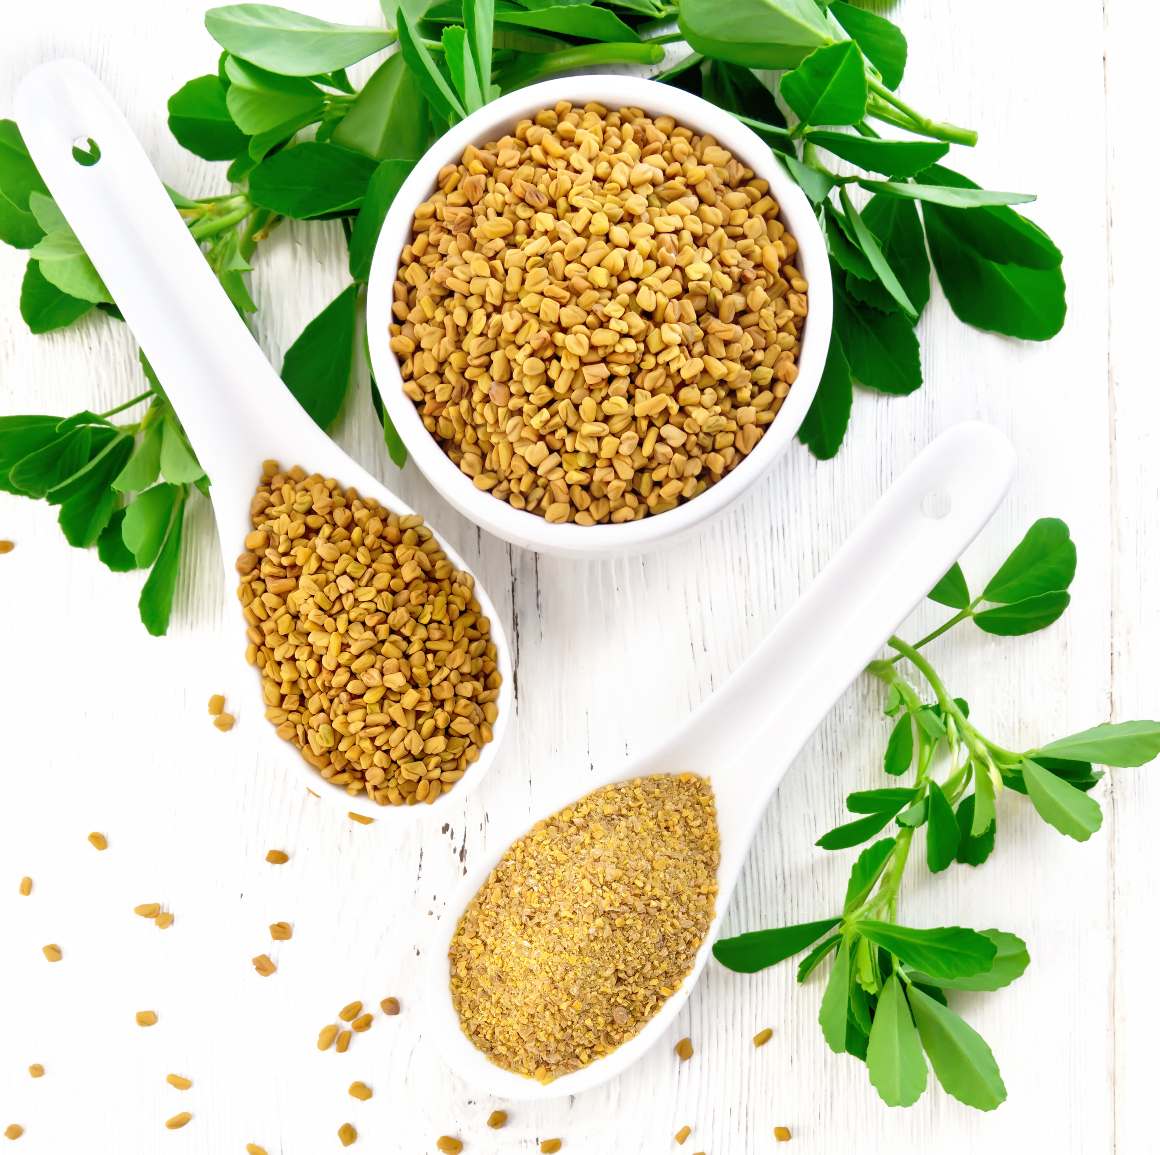 Precautions and Proper Usage of Fenugreek Seeds & Tea